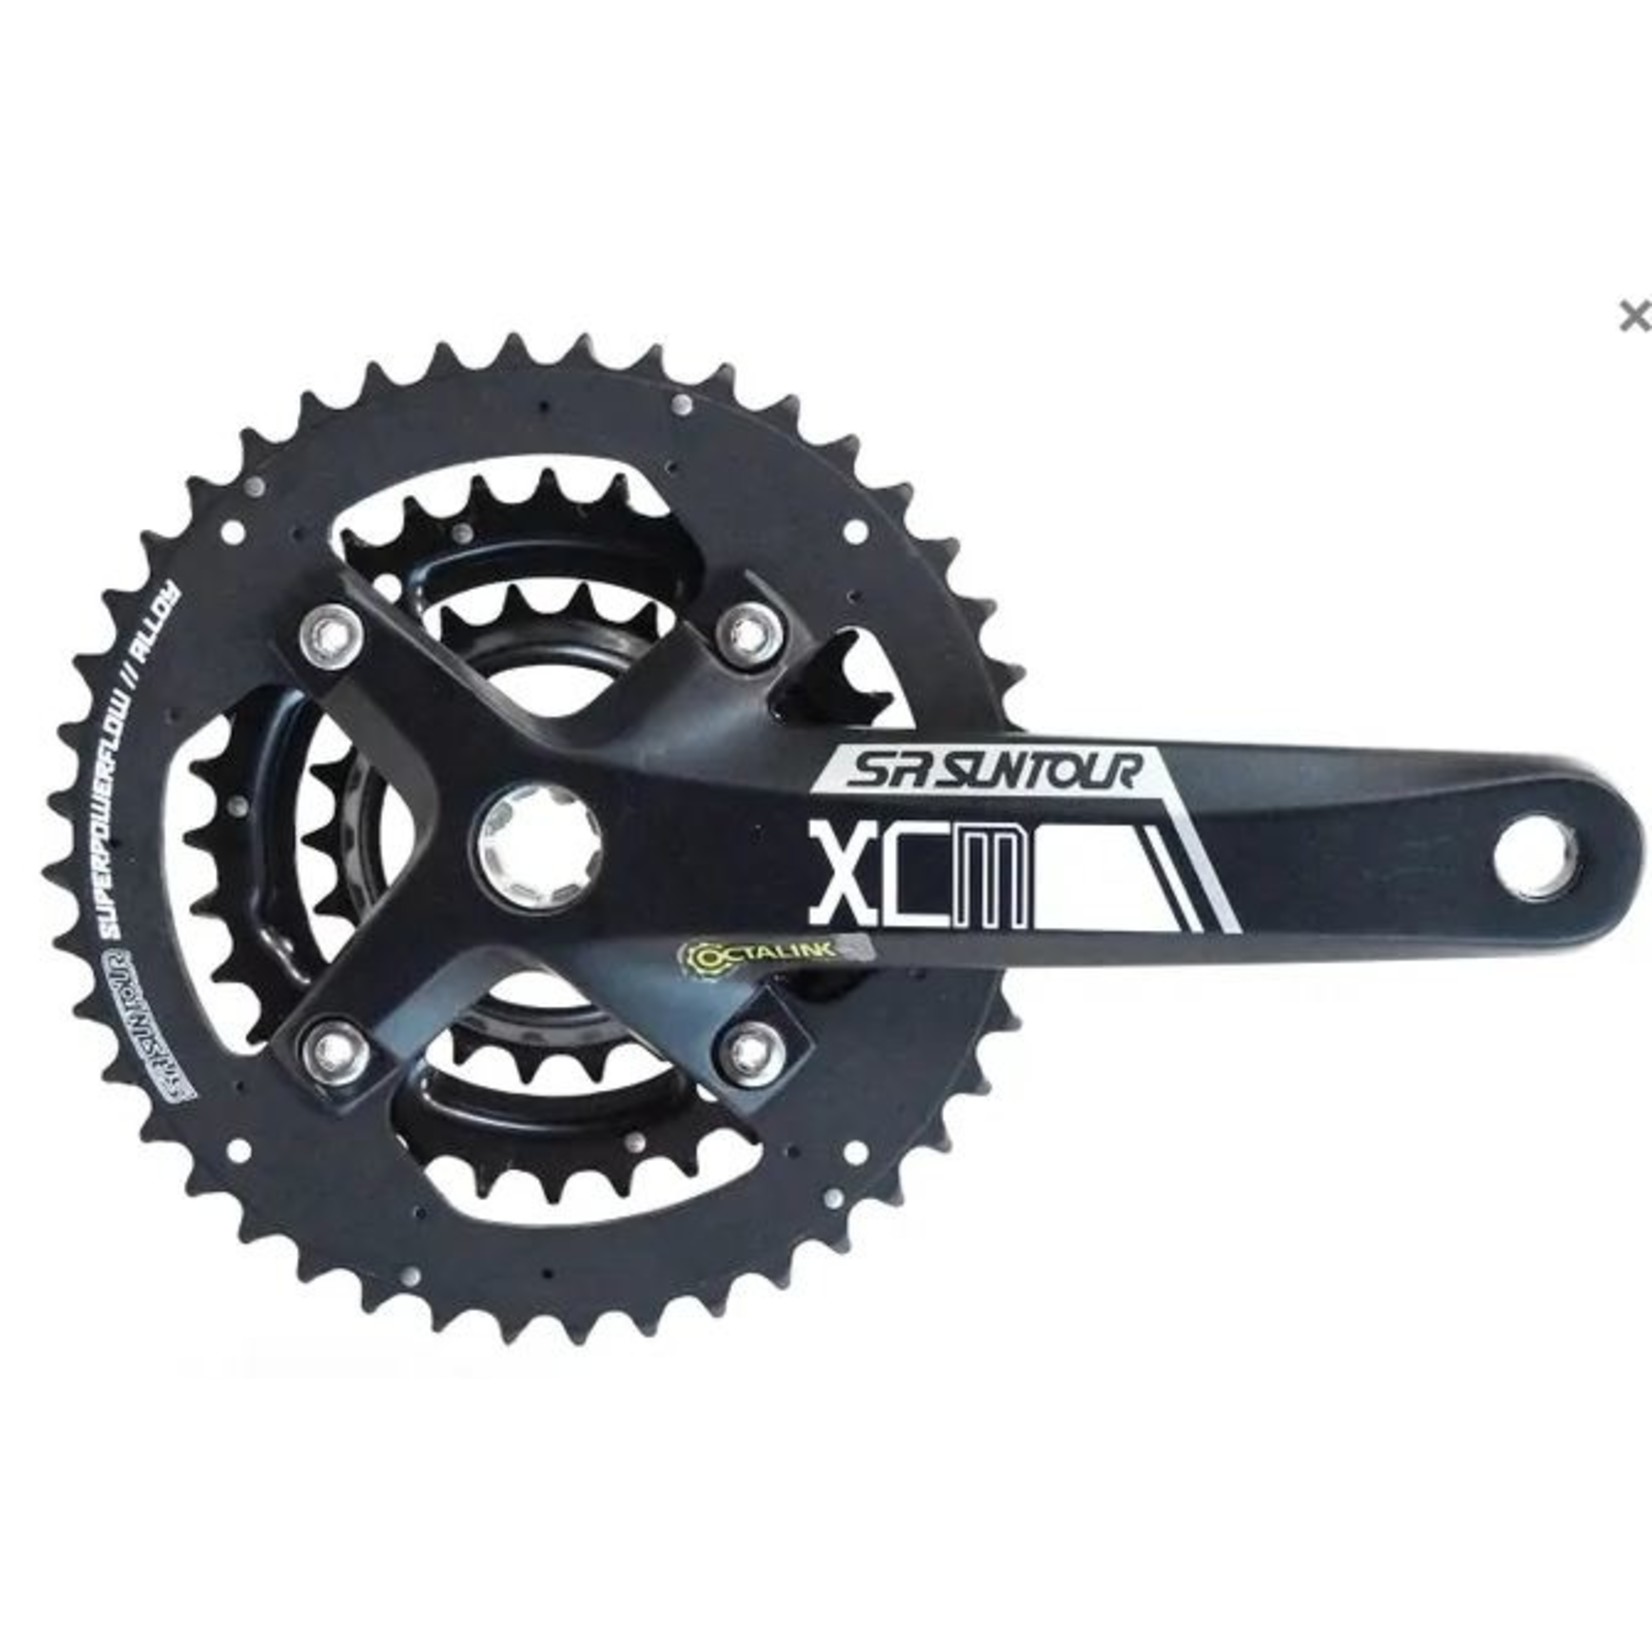 Suntour SR Suntour Bike Chainwheel Set - Xcm-T - 3X9 Speed - 170mmX48T/36T/26T - Black